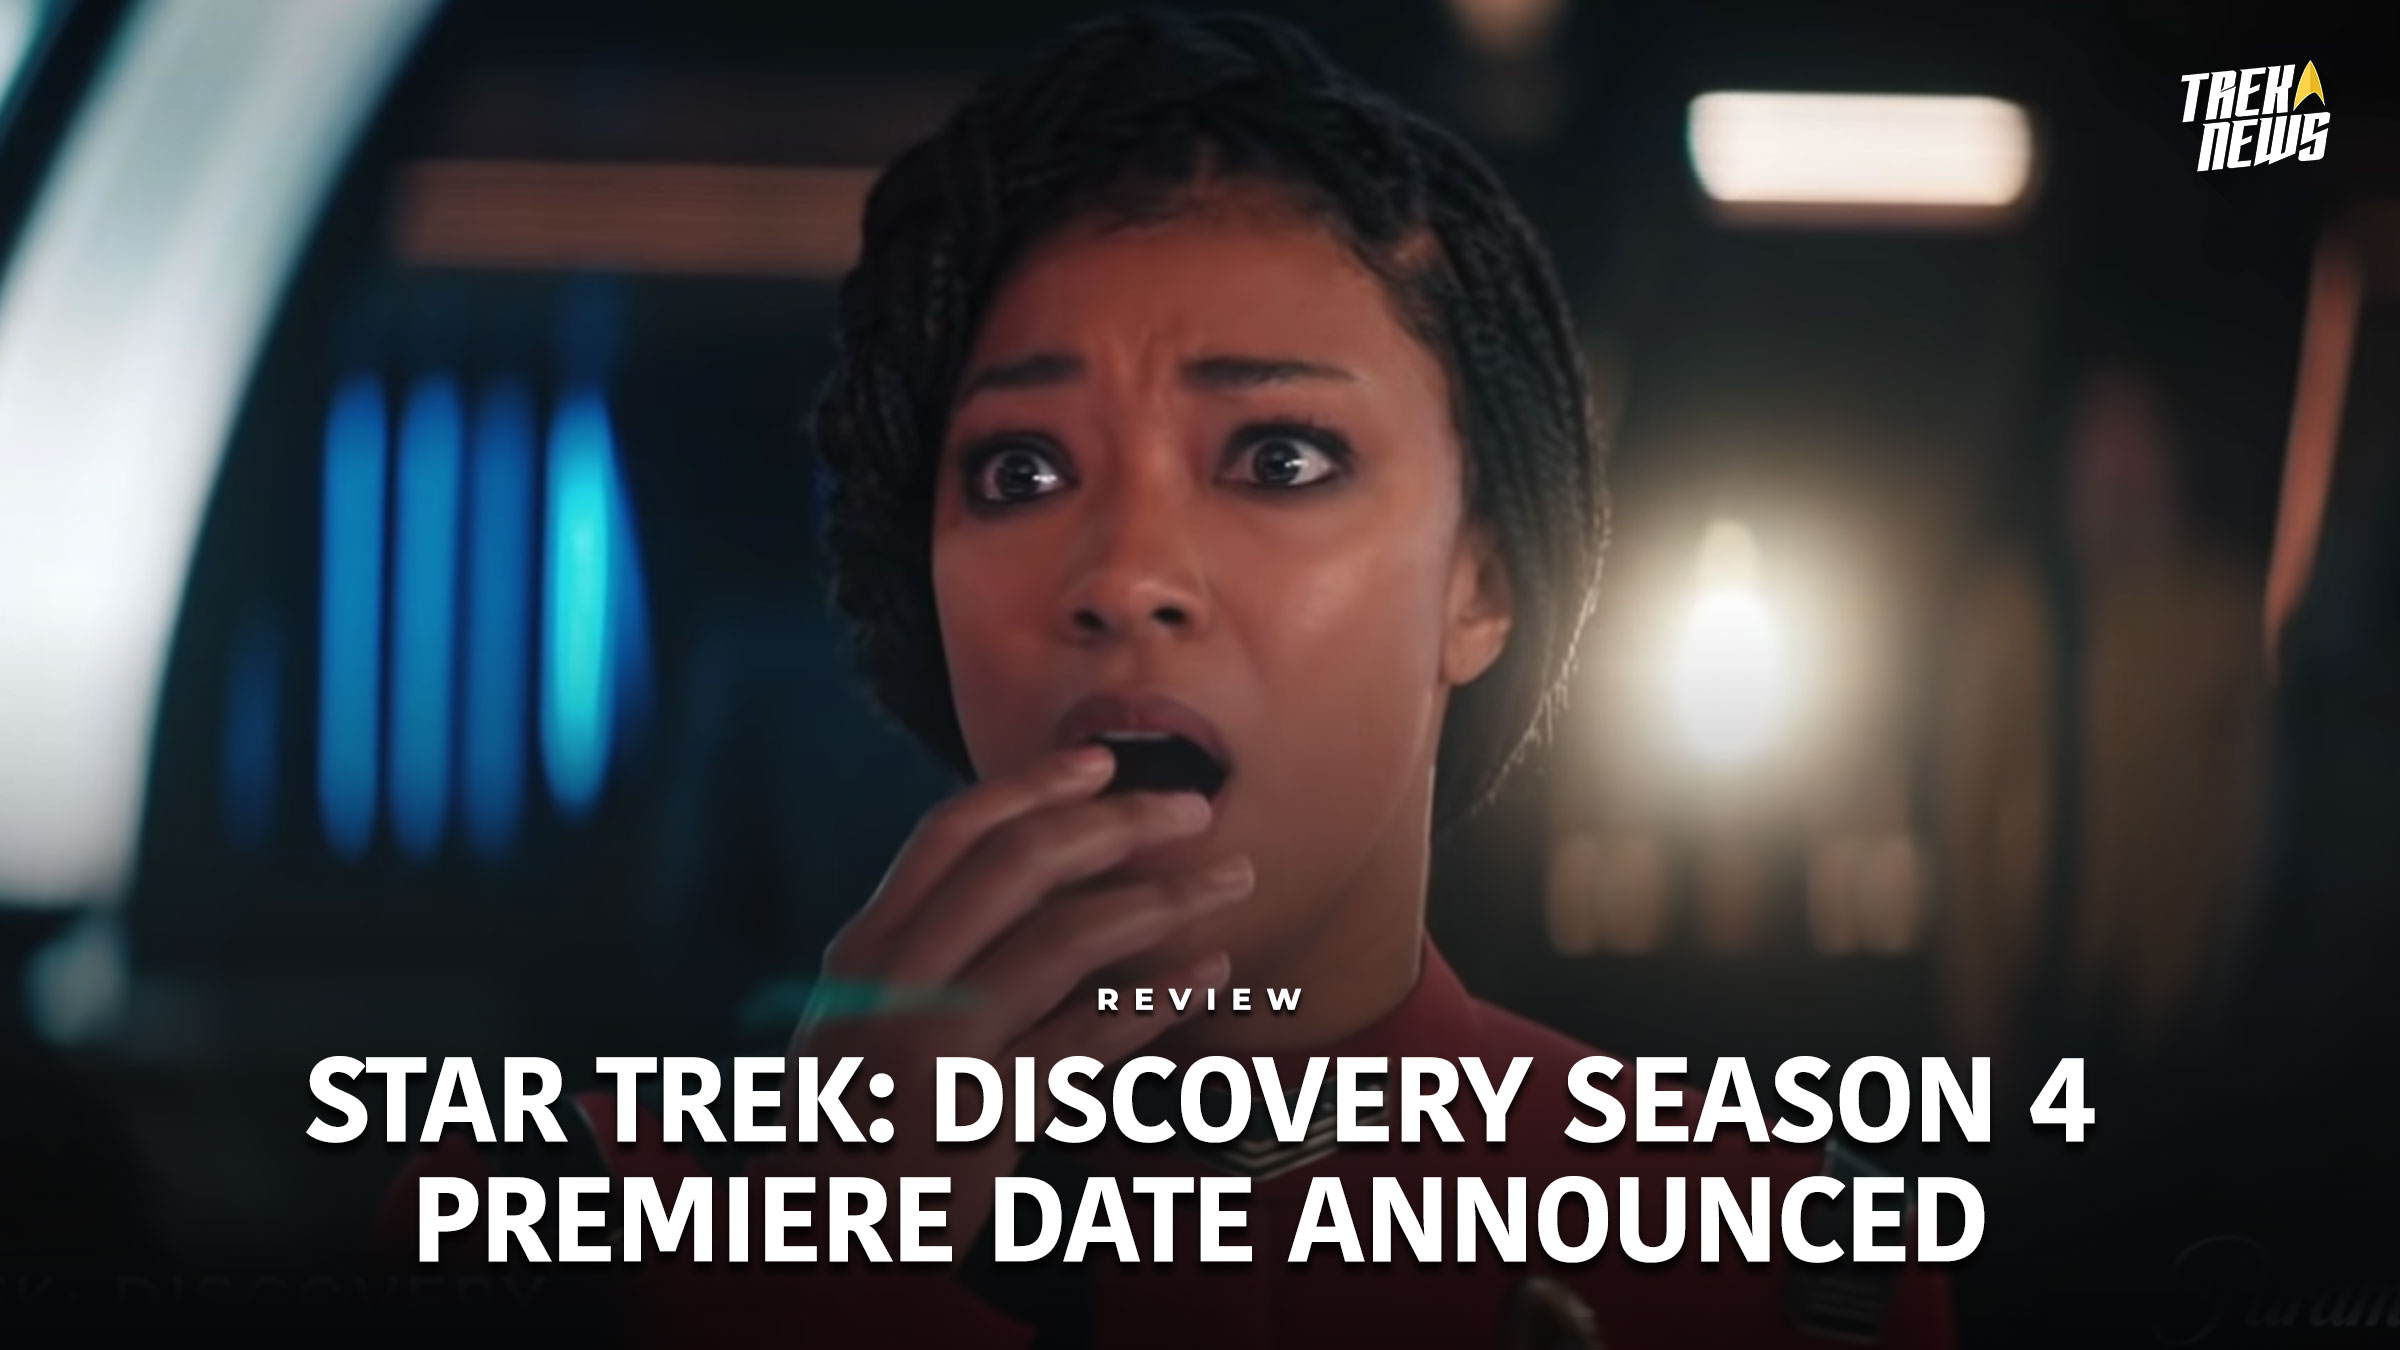 Star Trek: Discovery Season 4 Premiere Date Announced, New Photo Of Sonequa Martin-Green As Captain Burnham